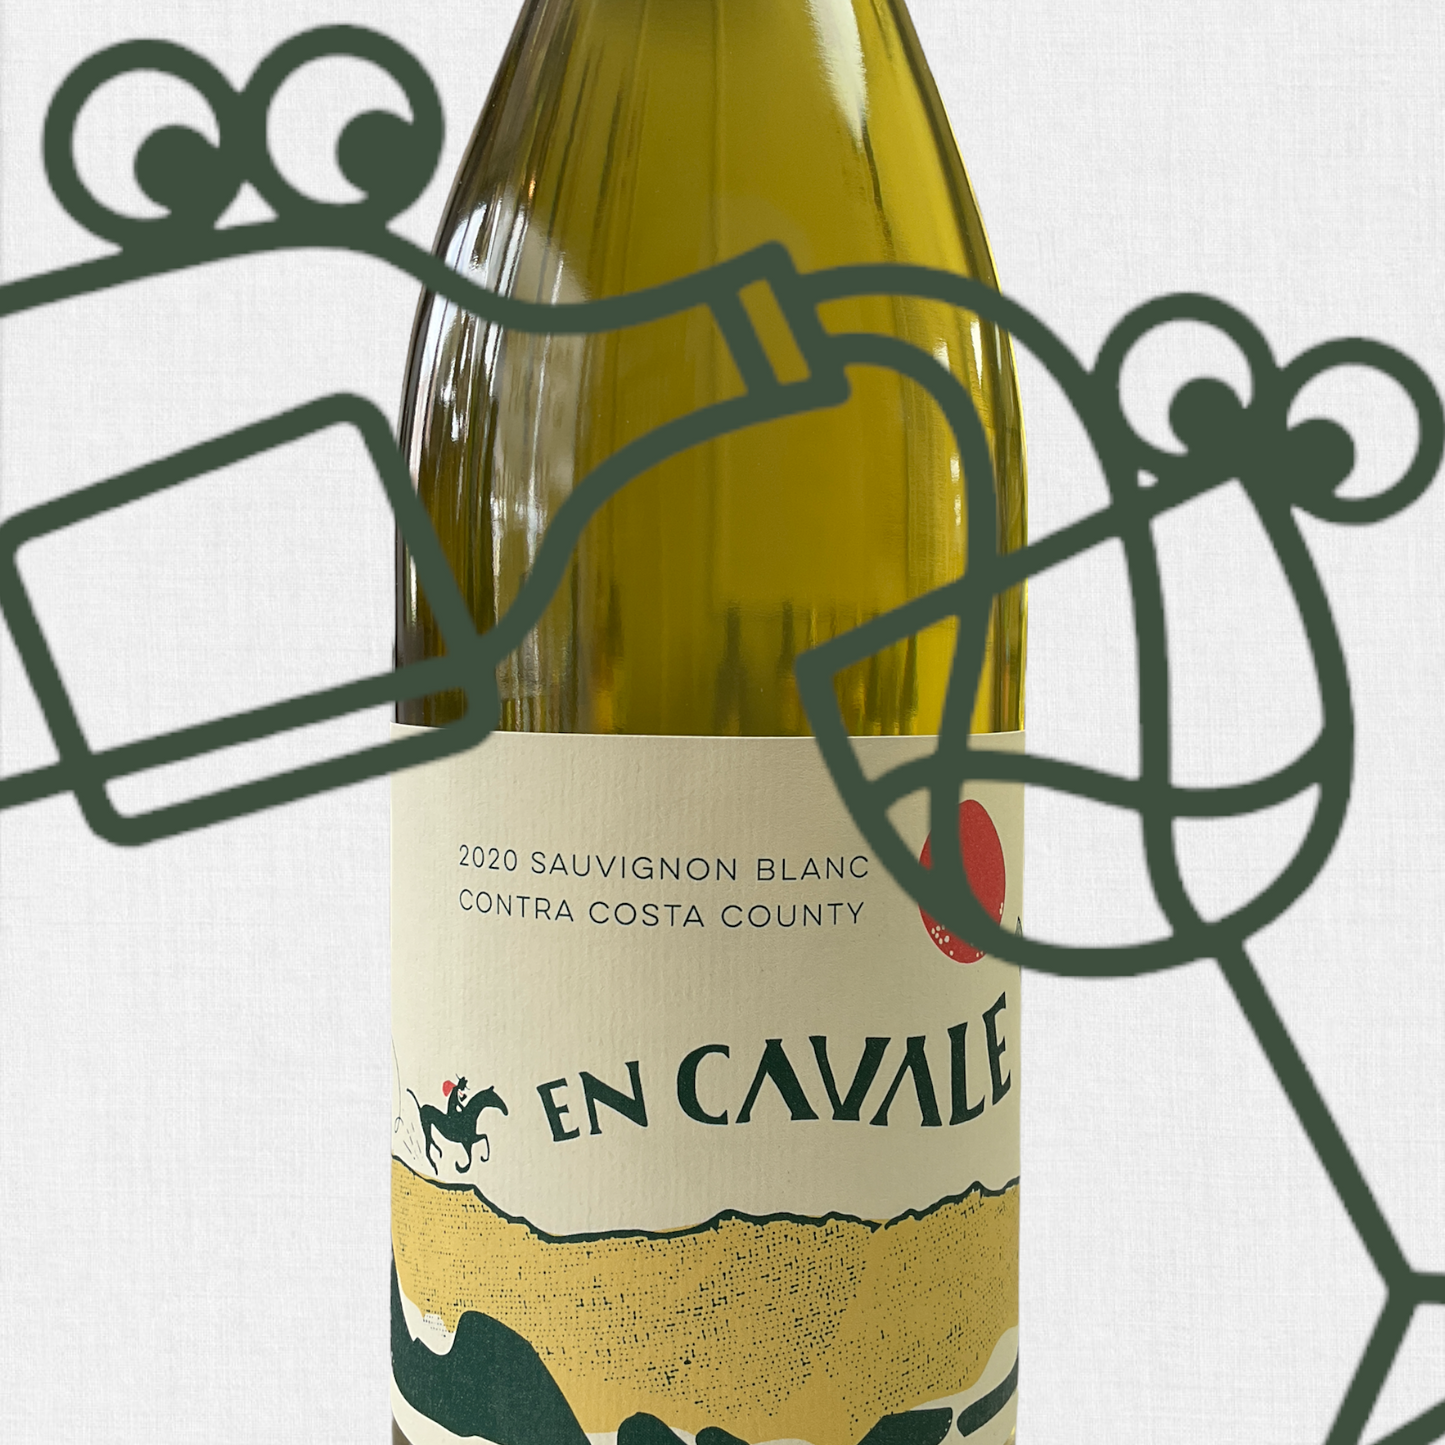 En Cavale Sauvignon Blanc 2020 Contra Costa, California - Williston Park Wines & Spirits